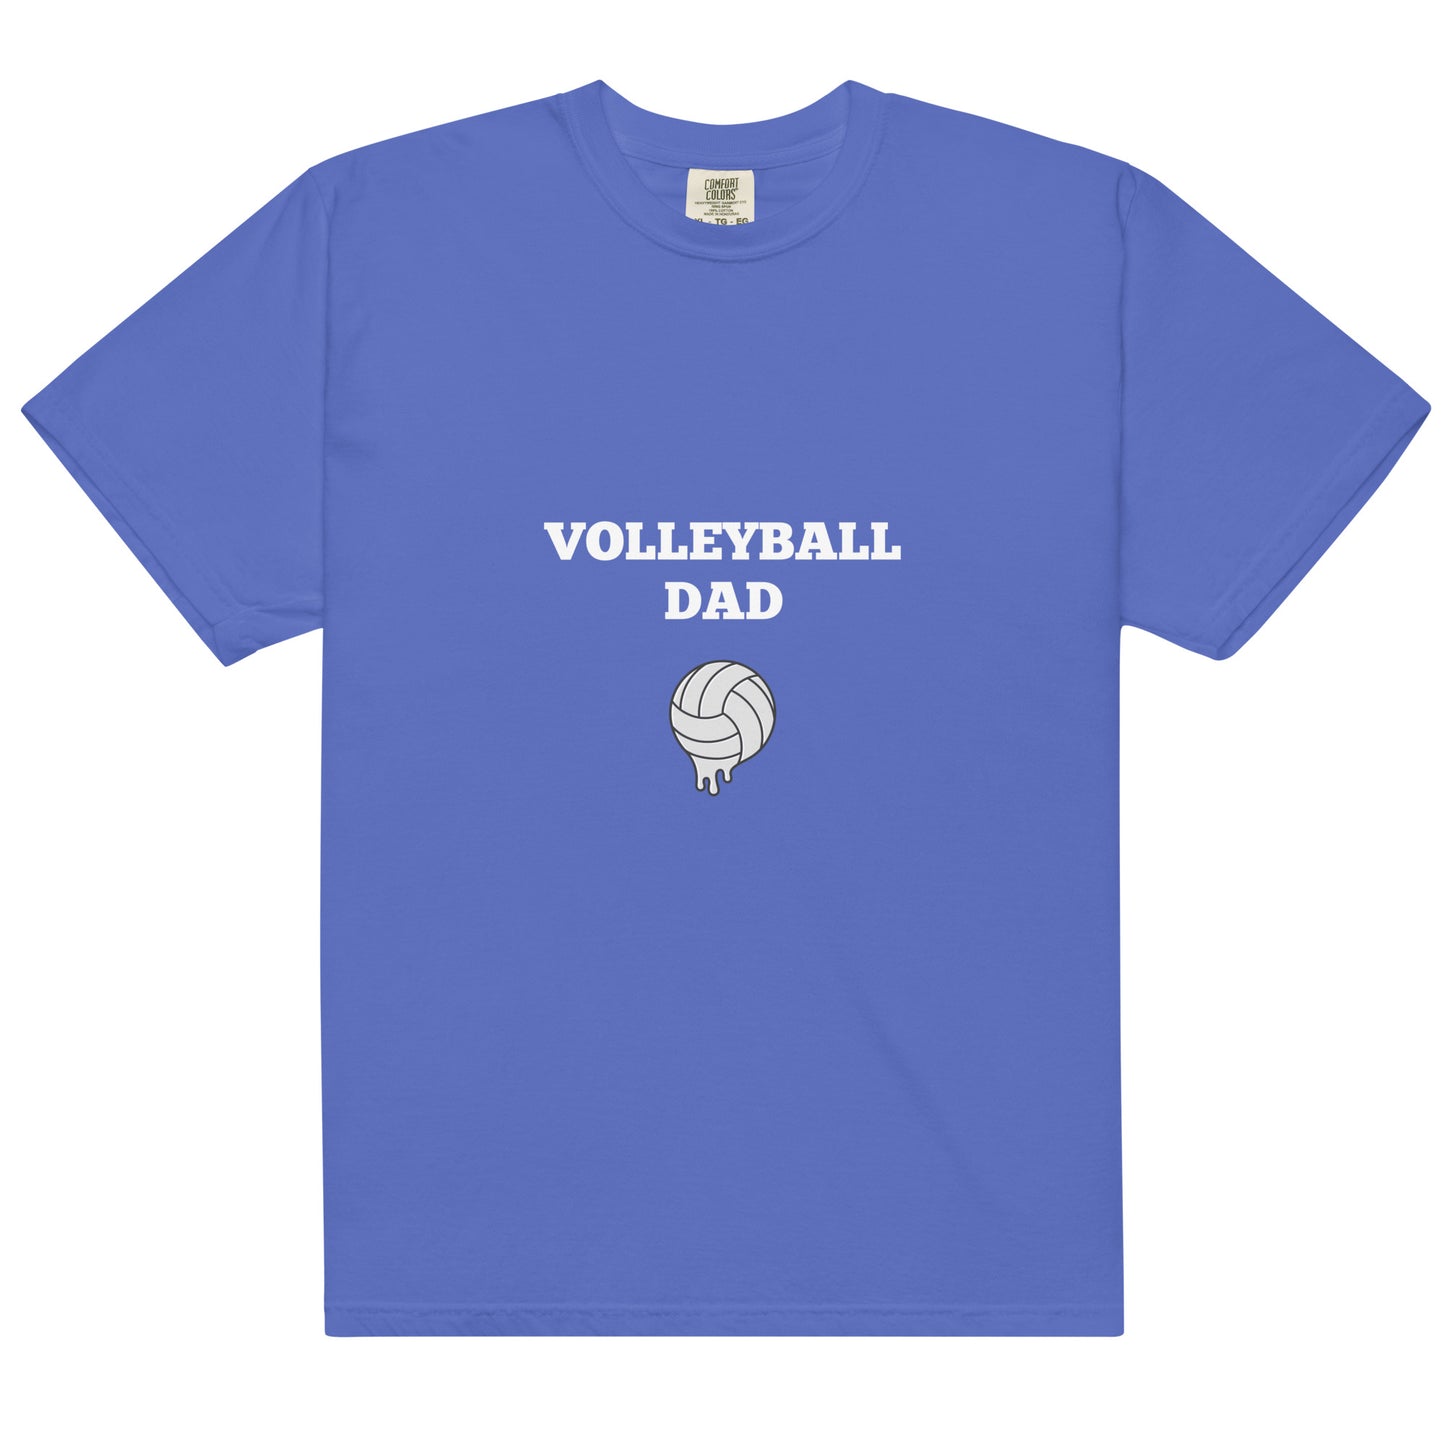 Volleyball Dad Printed Tshirt